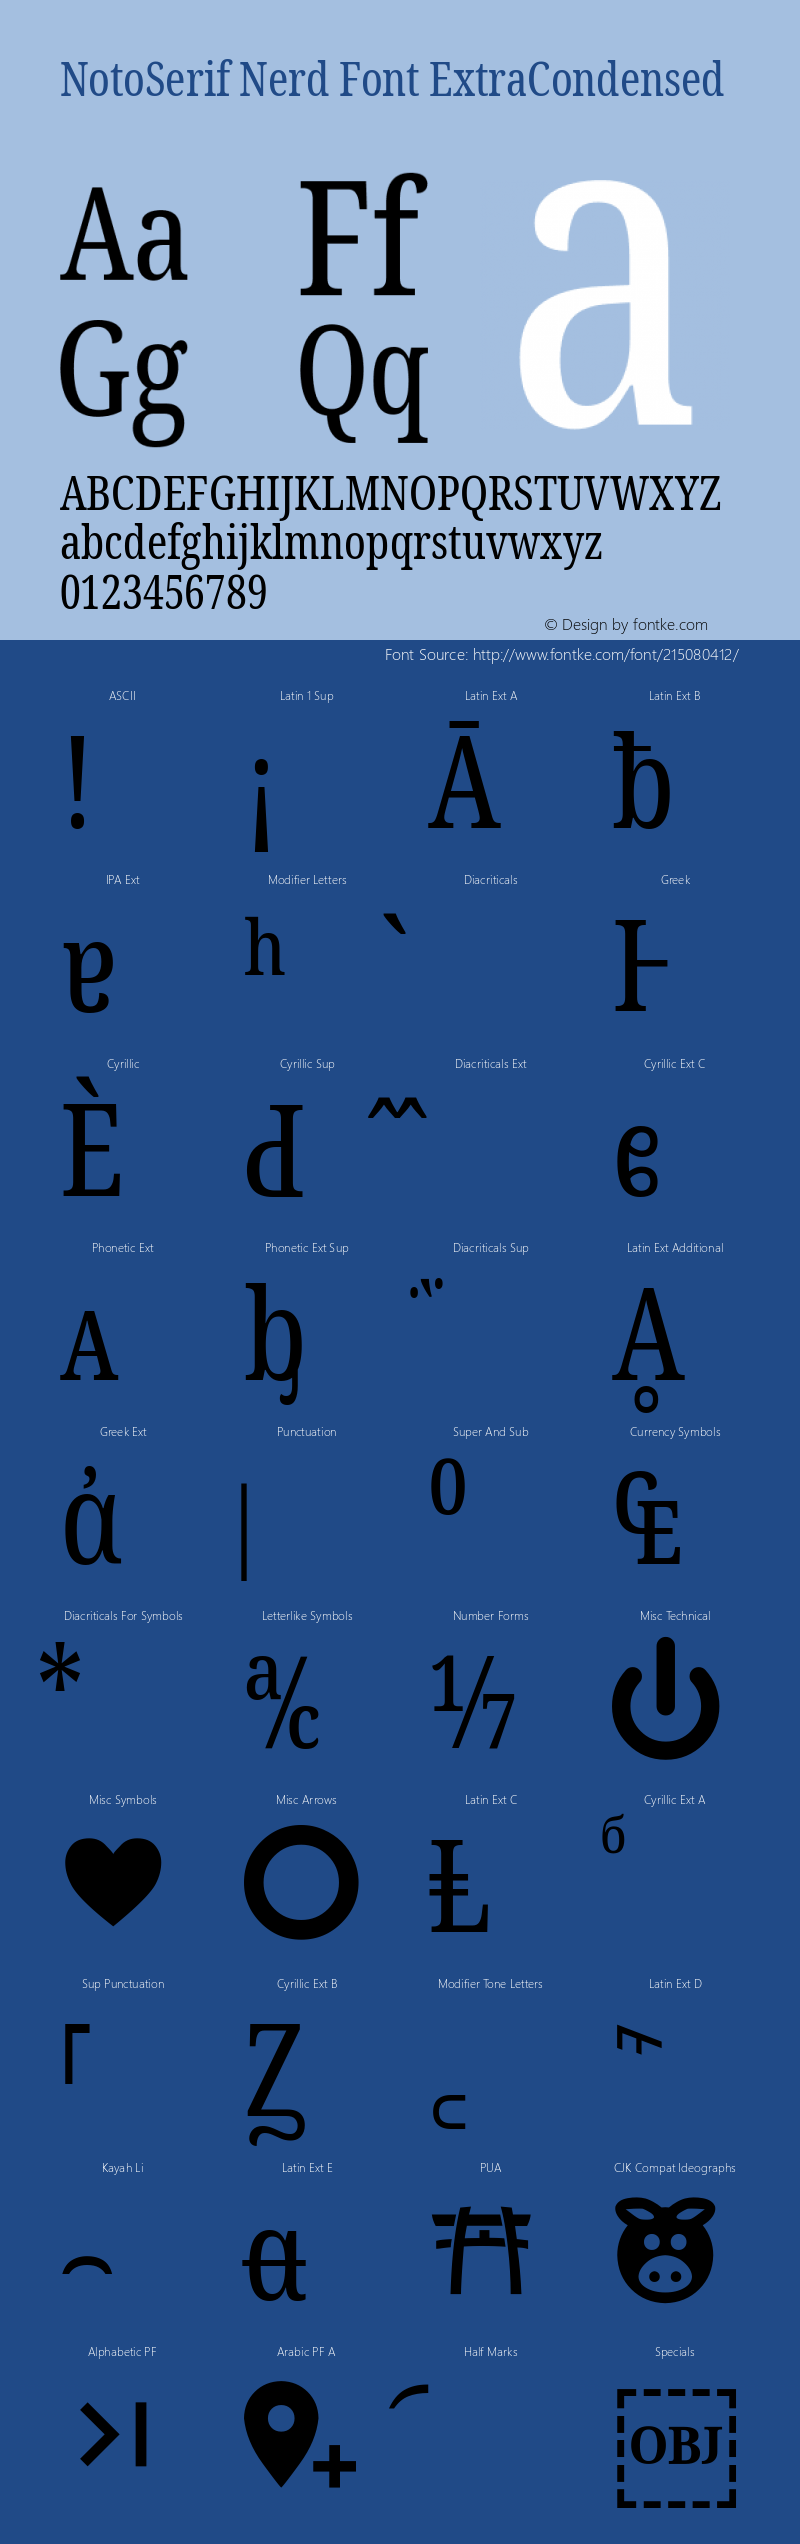 Noto Serif ExtraCondensed Nerd Font Complete Version 2.000;GOOG;noto-source:20170915:90ef993387c0; ttfautohint (v1.7);Nerd Fonts 2.1.0图片样张